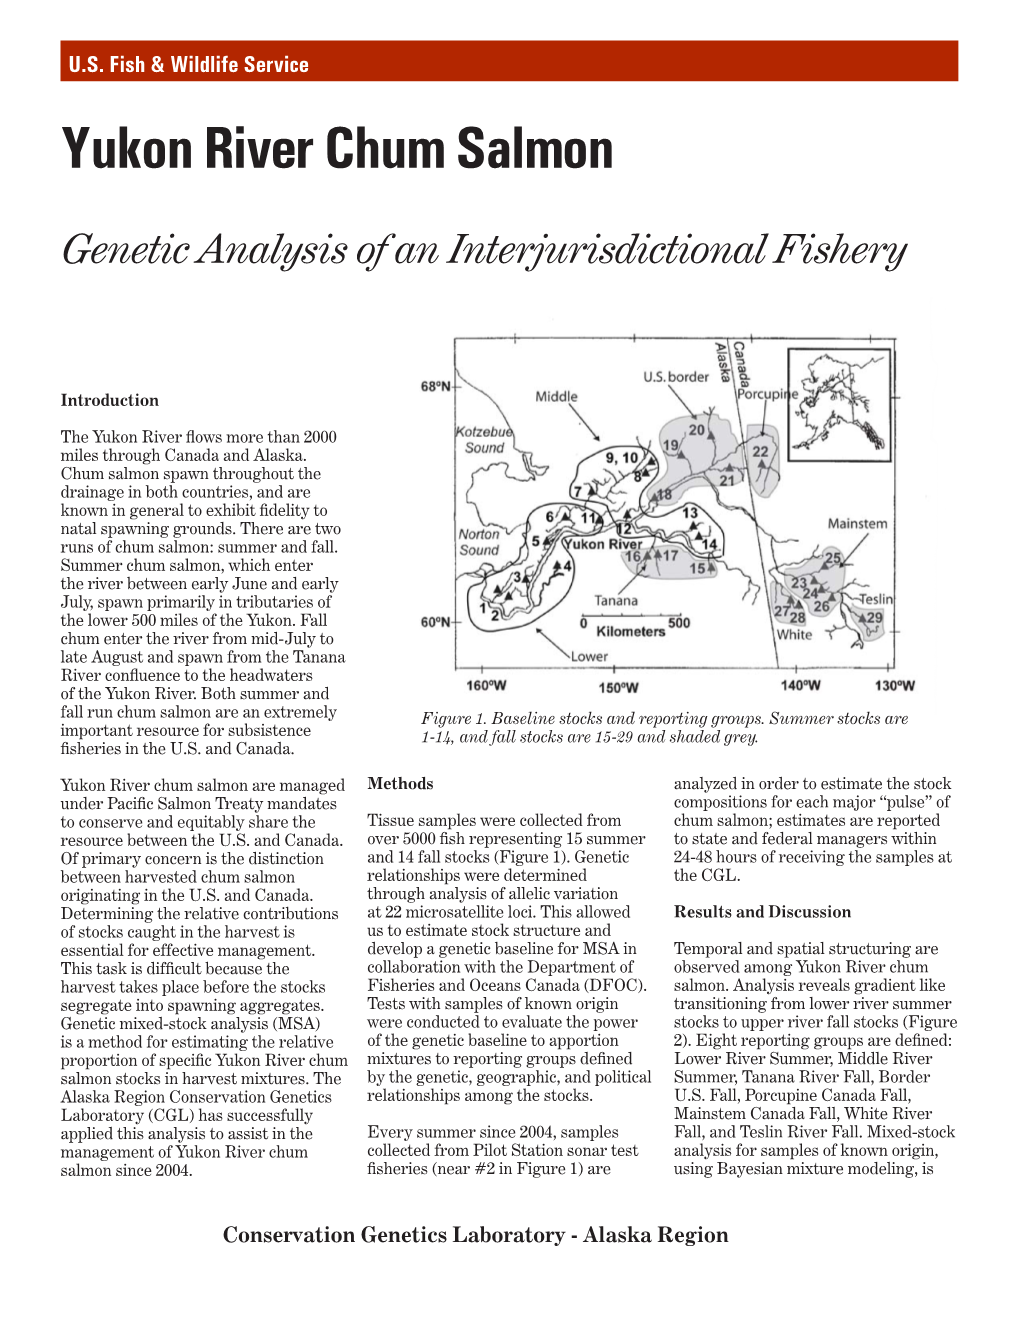 Yukon River Chum Salmon